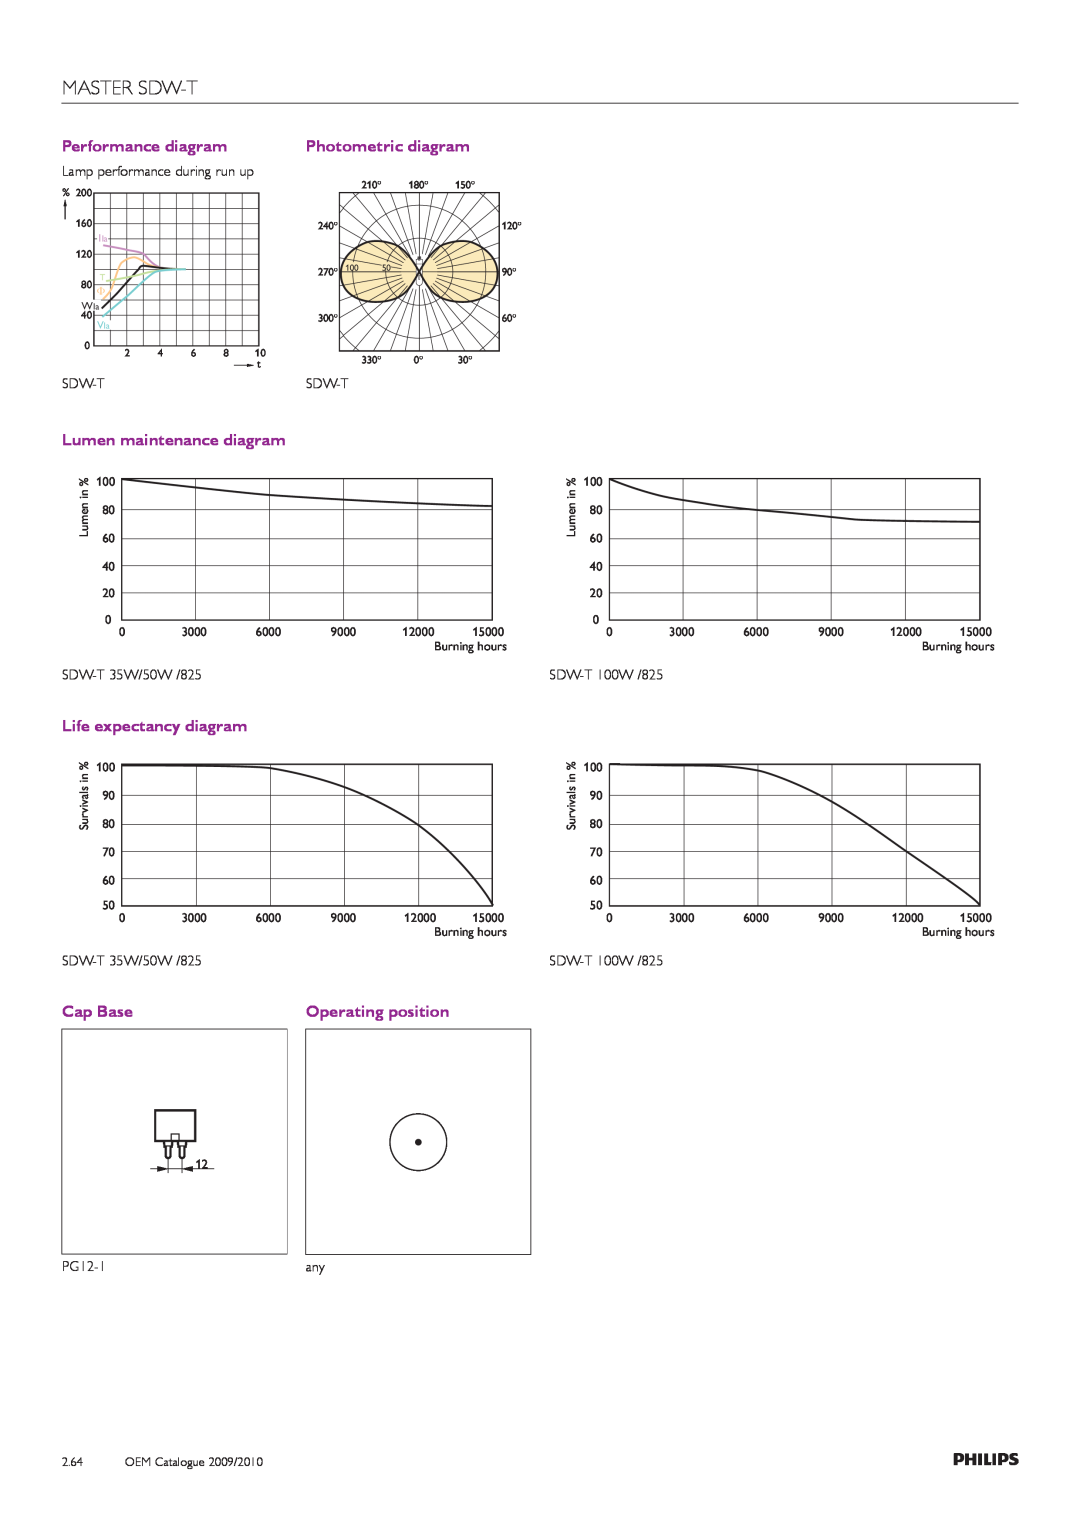 Philips Compact HID Lamp and Gear manual Master Sdw-T, Performance diagram, Photometric diagram, Lumen maintenance diagram 